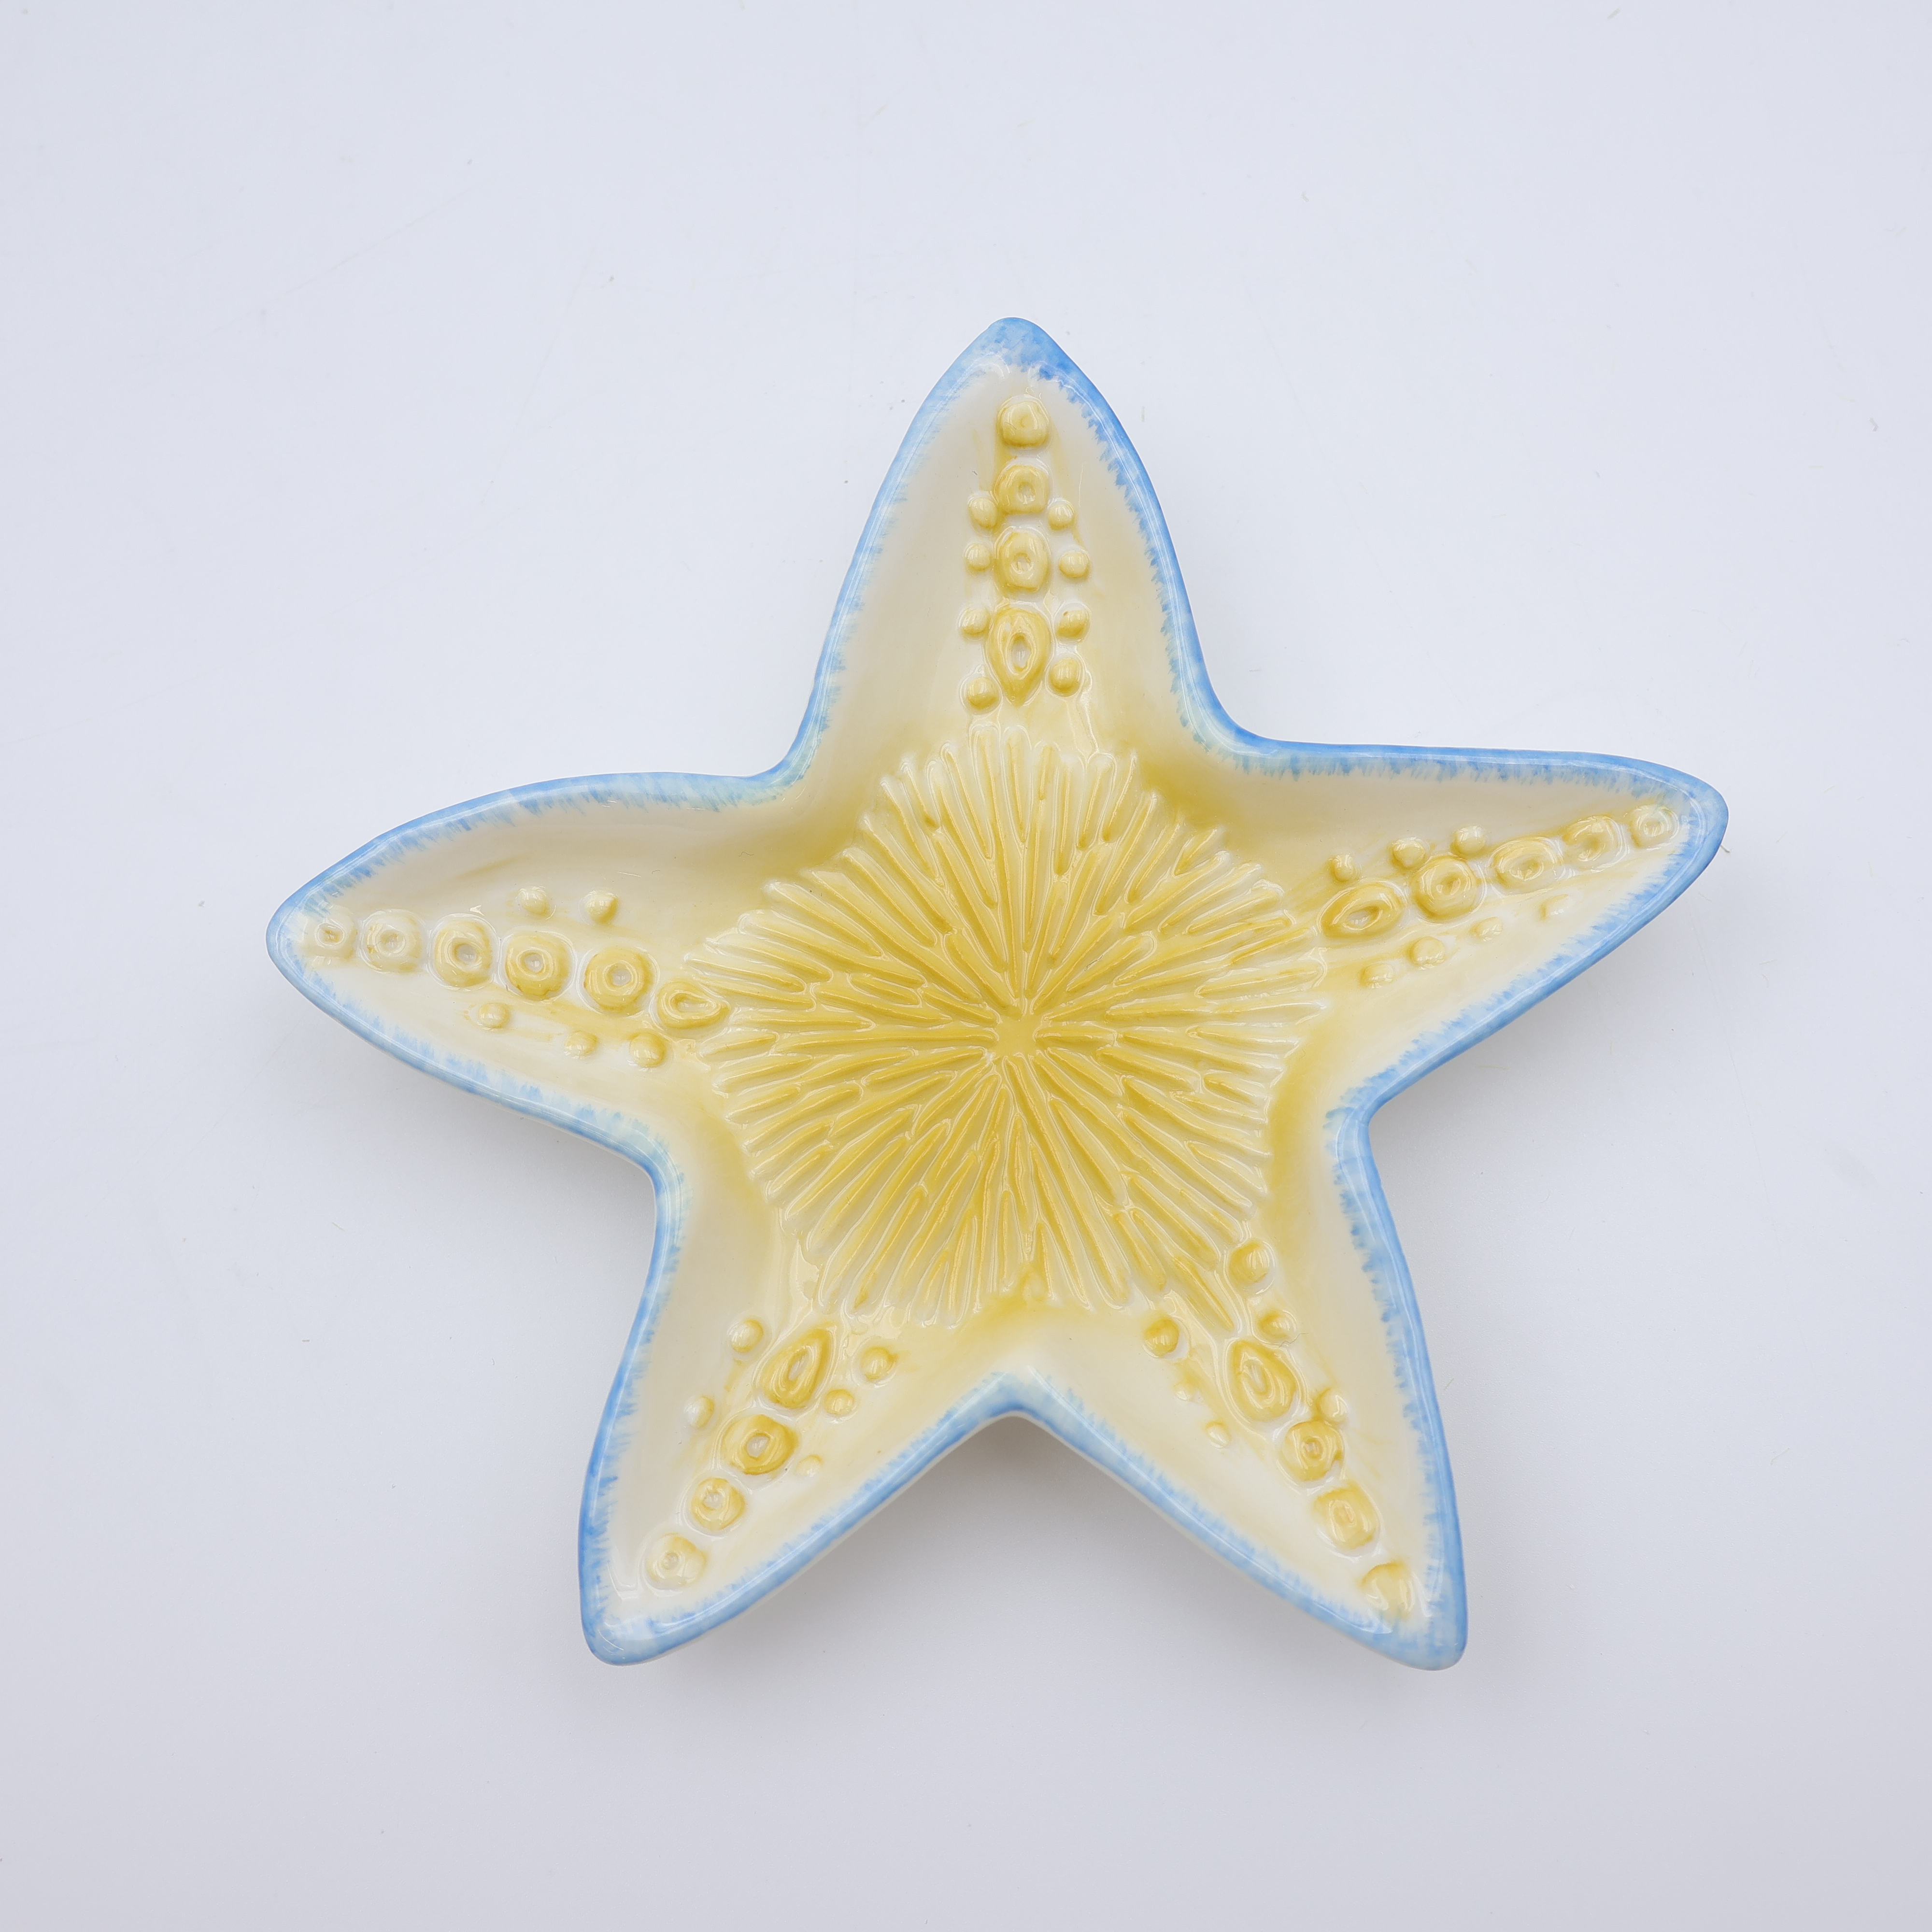 Ceramic starfish shape grate plate Featured Image